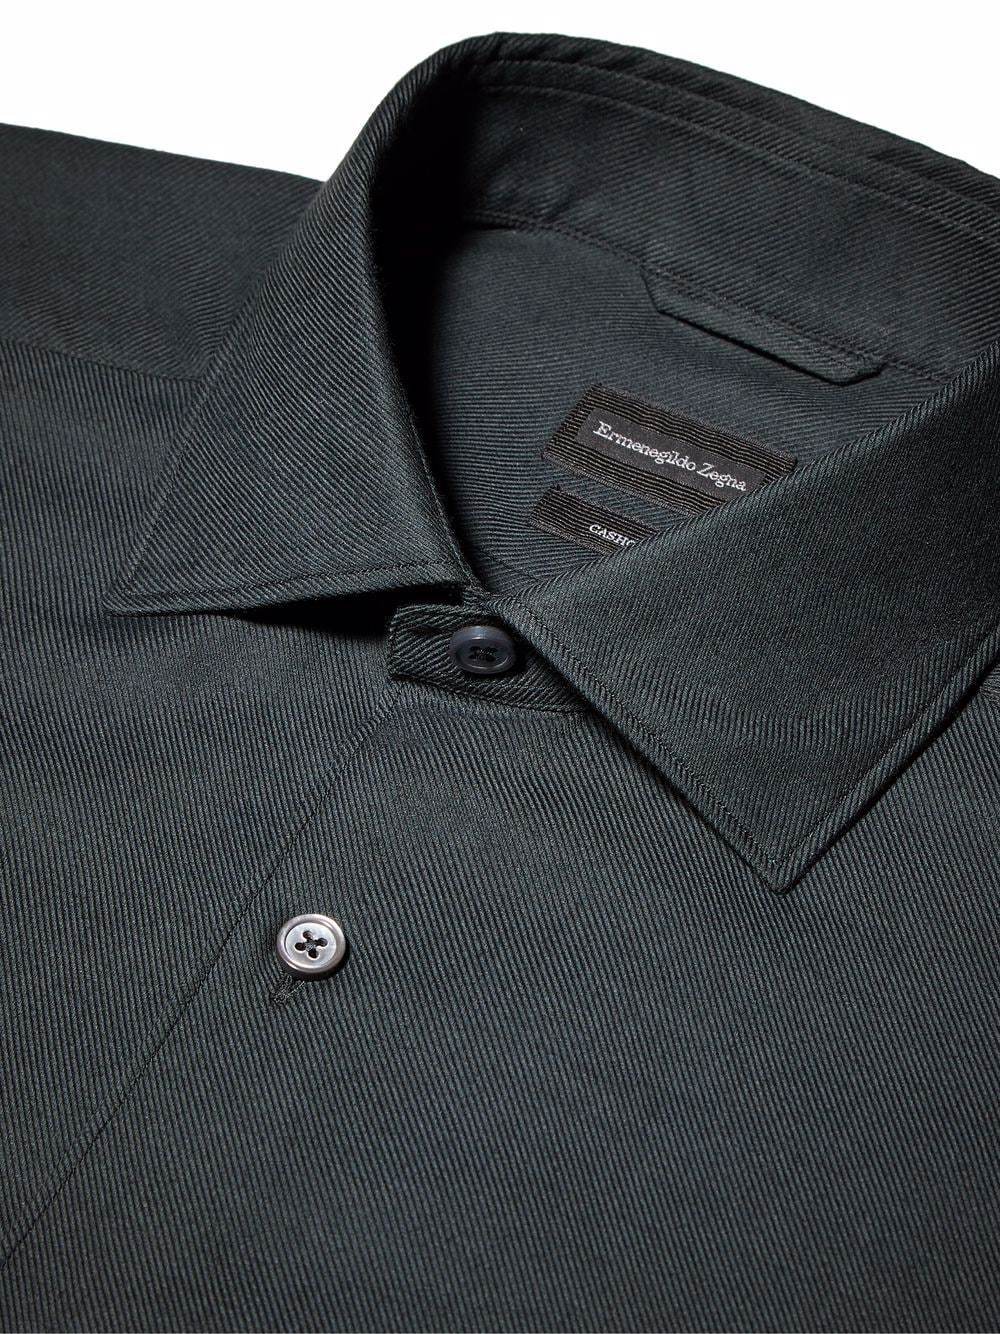 Ermenegildo Zegna Spread Collar Shirt, $474 | farfetch.com | Lookastic